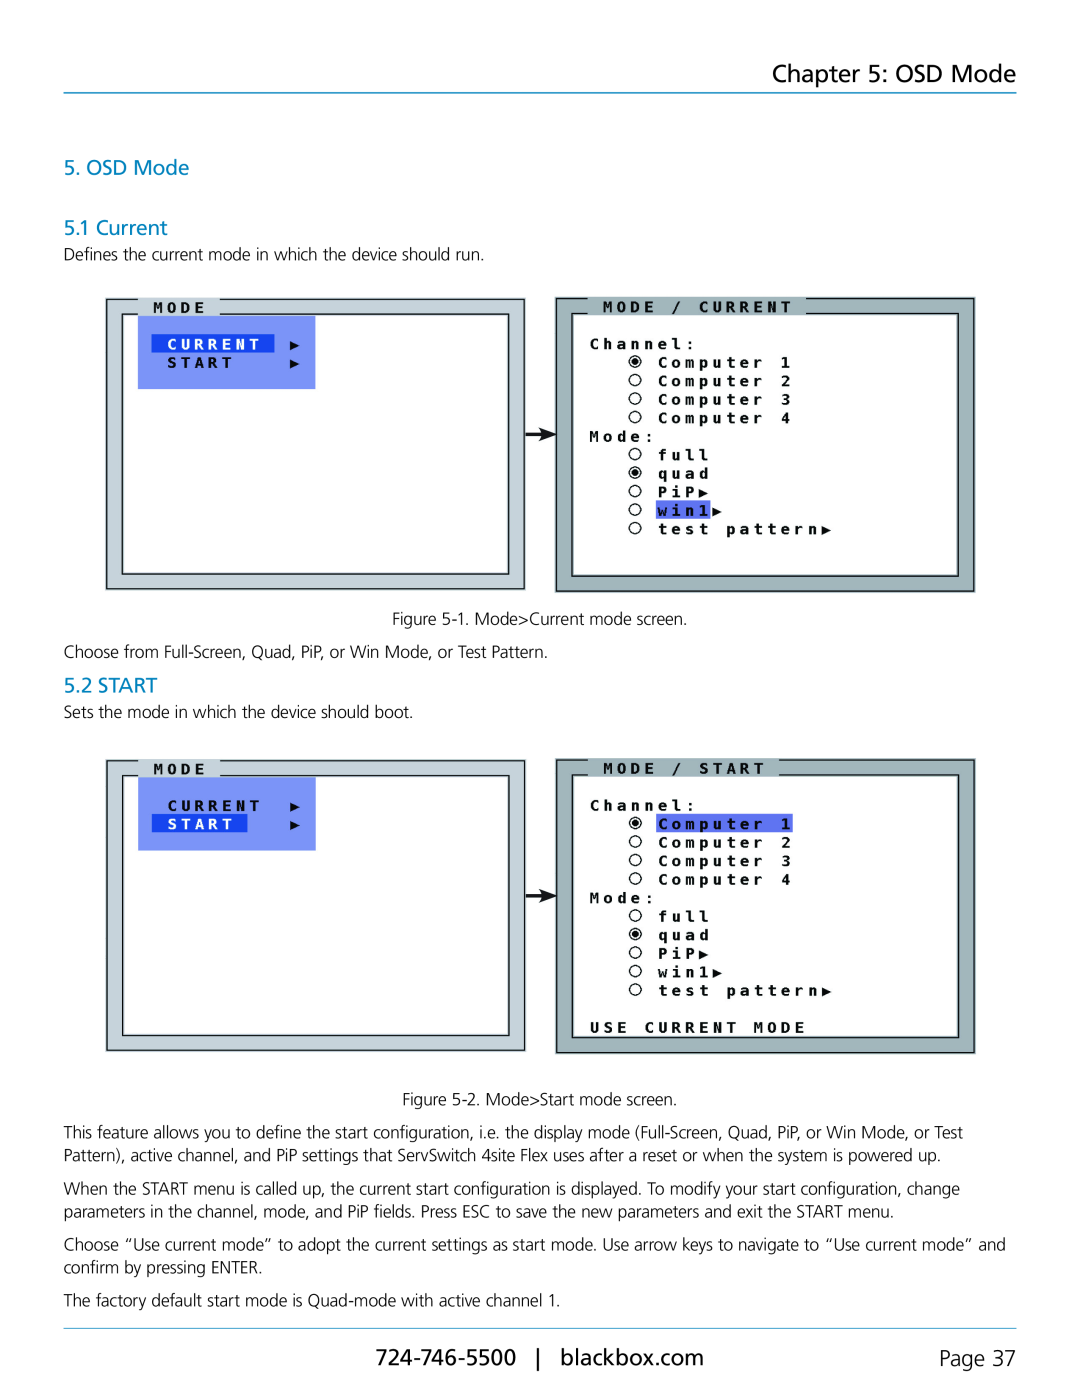 Black Box servswitch 4site flex, KVP40004A manual OSD Mode 5.1 Current, Start, Page 